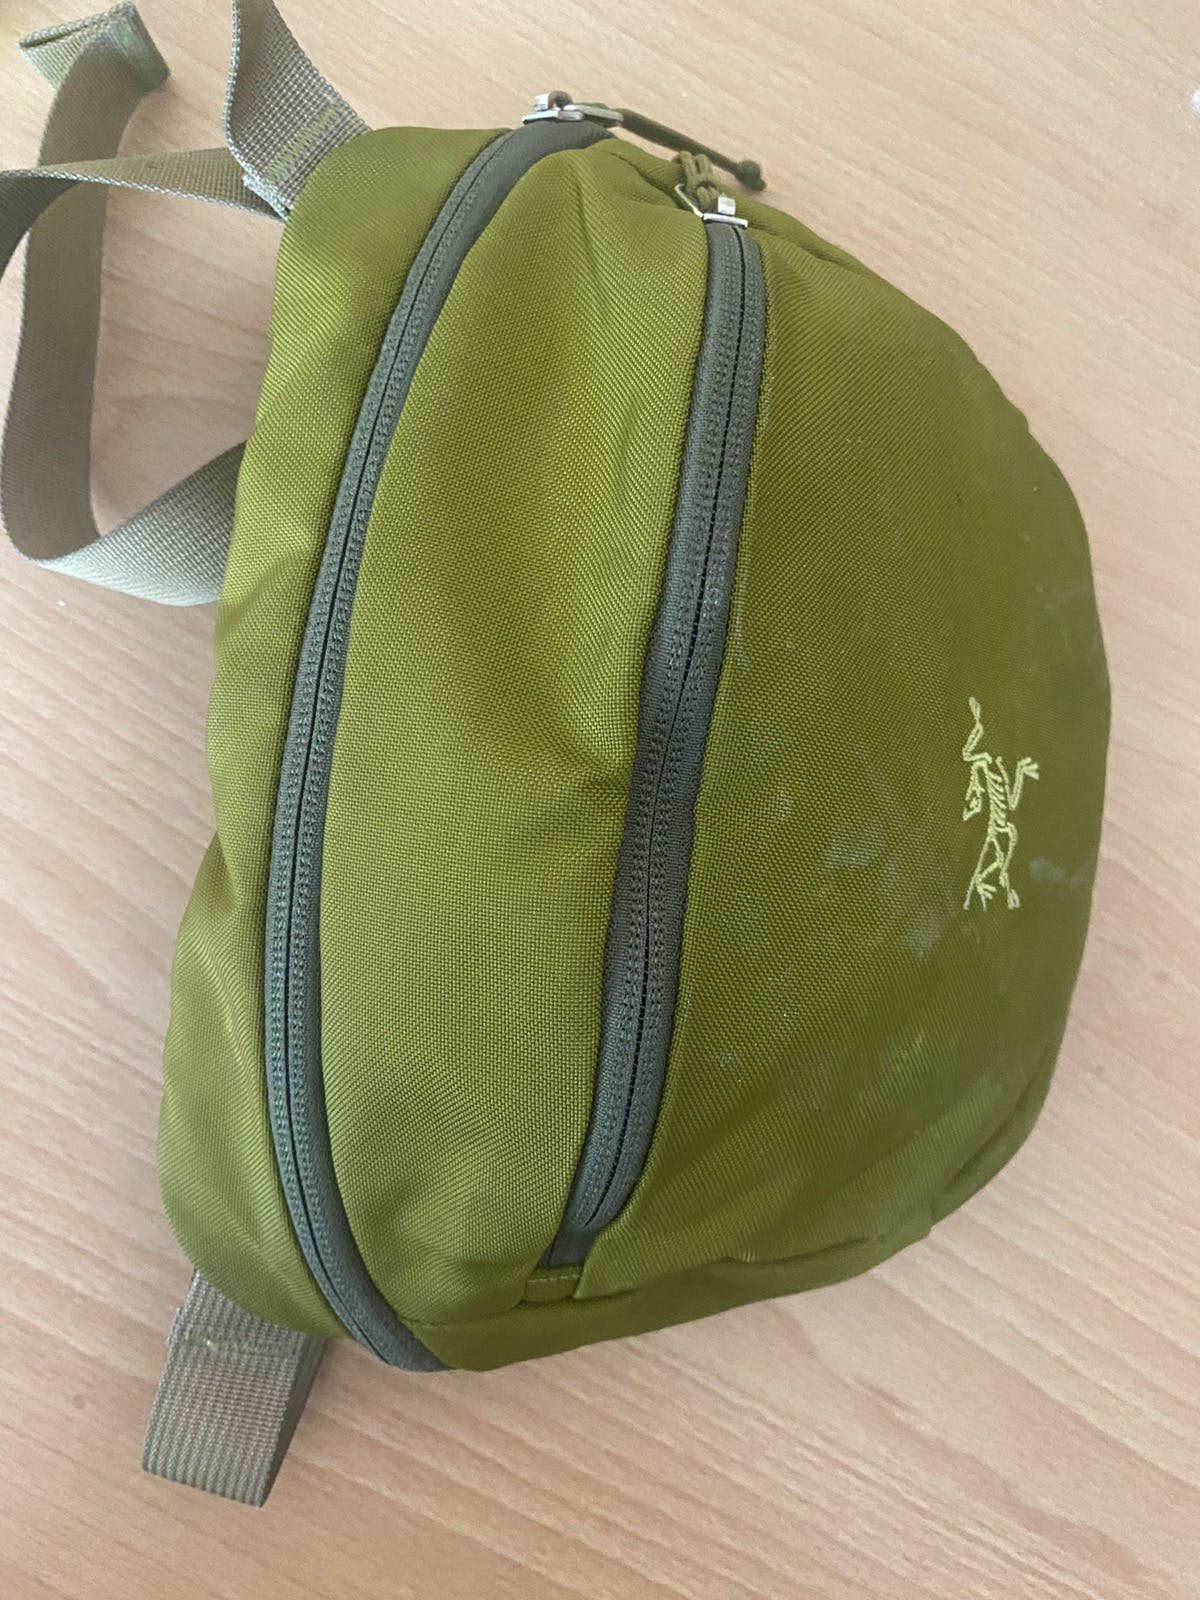 Authentic Arc’teryx Green Army Crossbody Sling Bag - 12